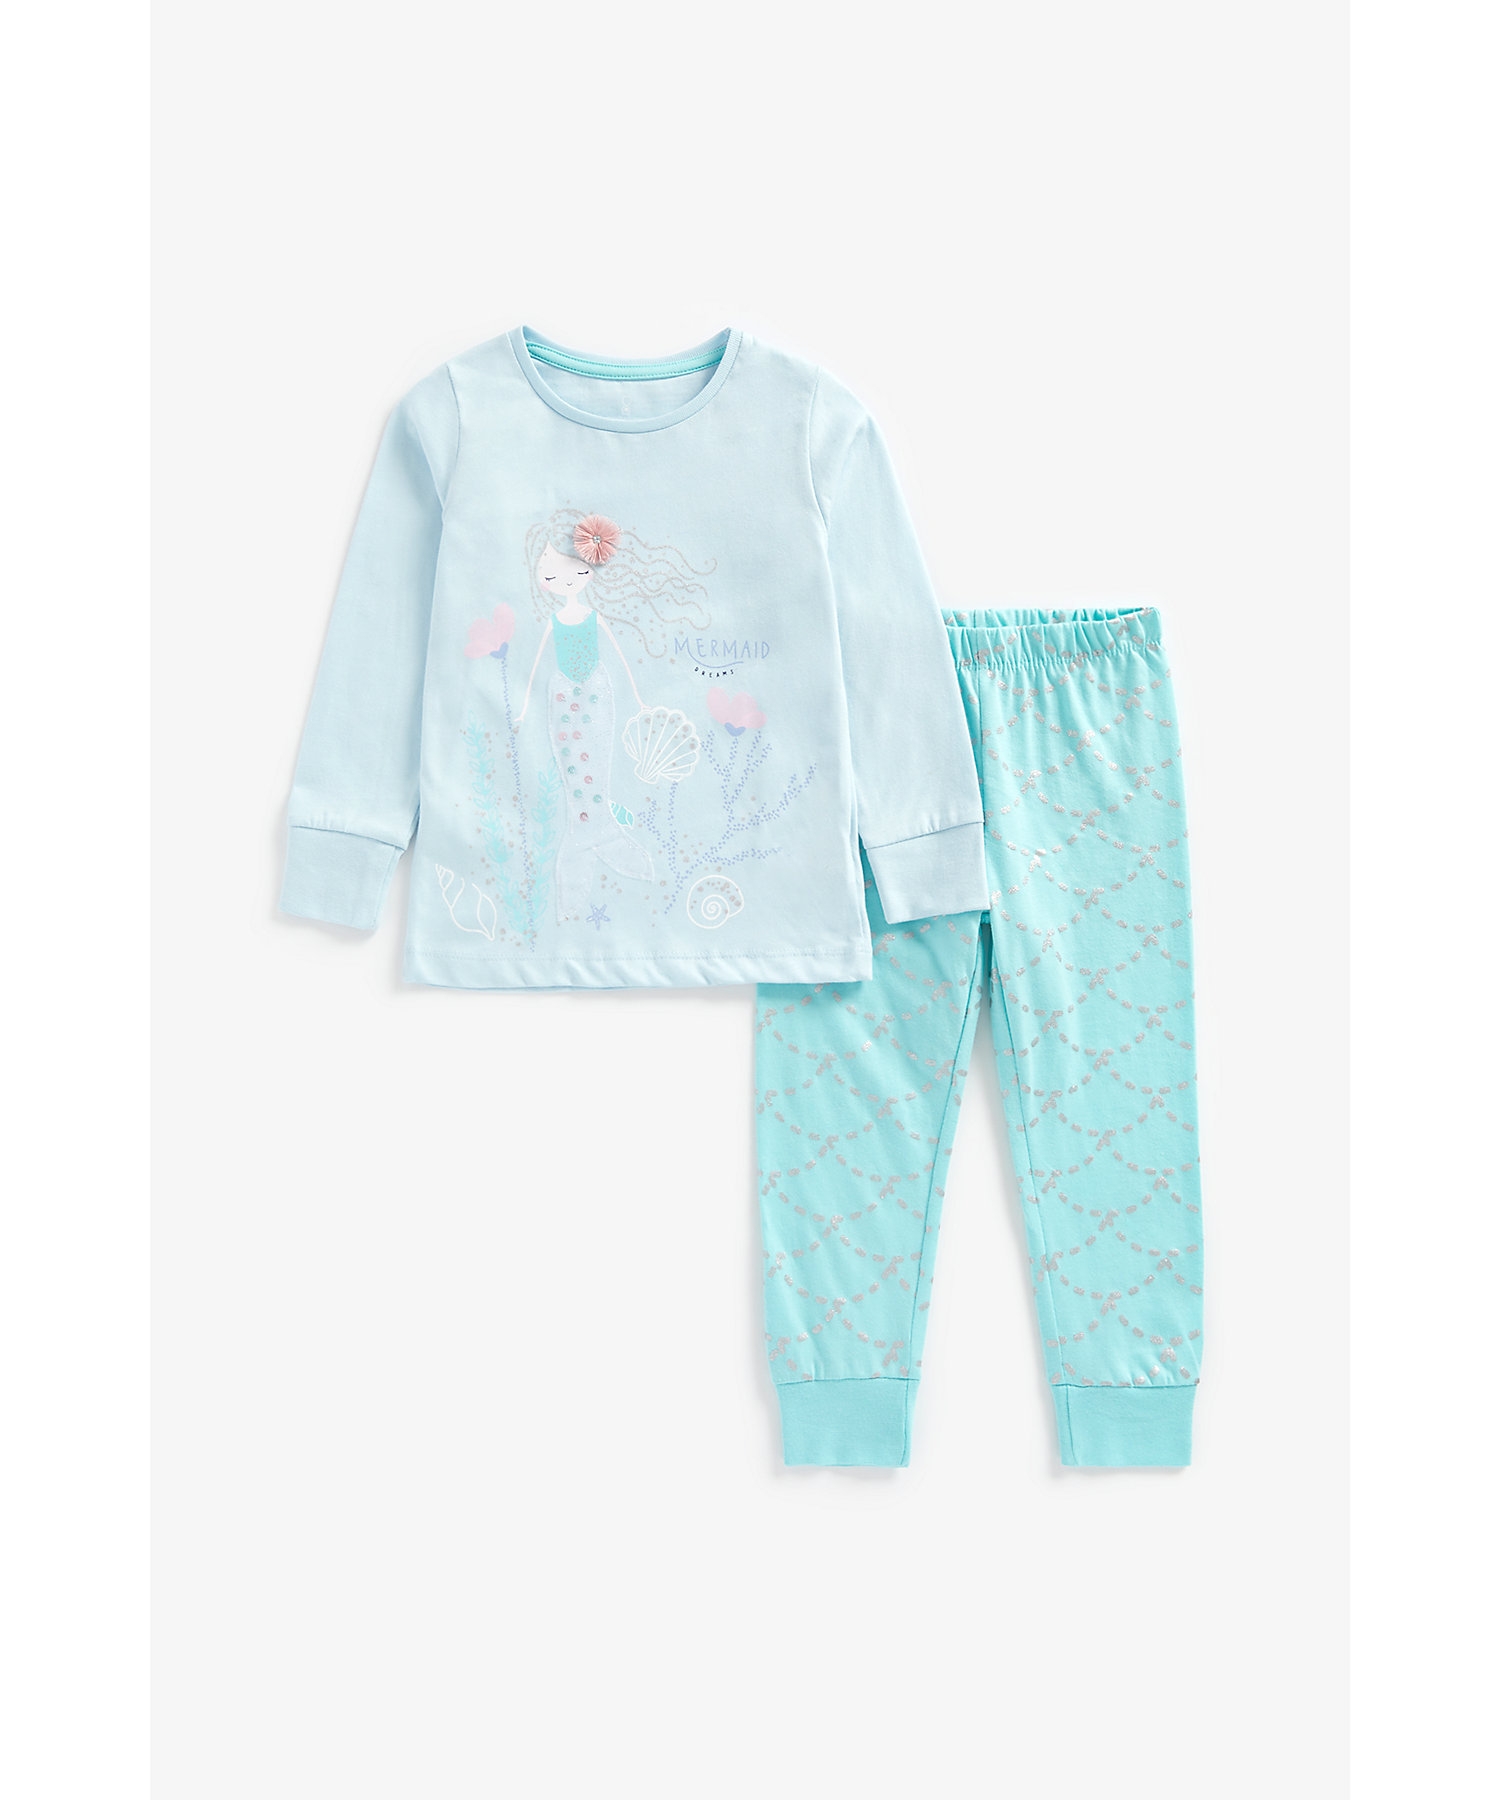 Girls Full Sleeves Pyjama Set Embellished Mermaid Design - Blue